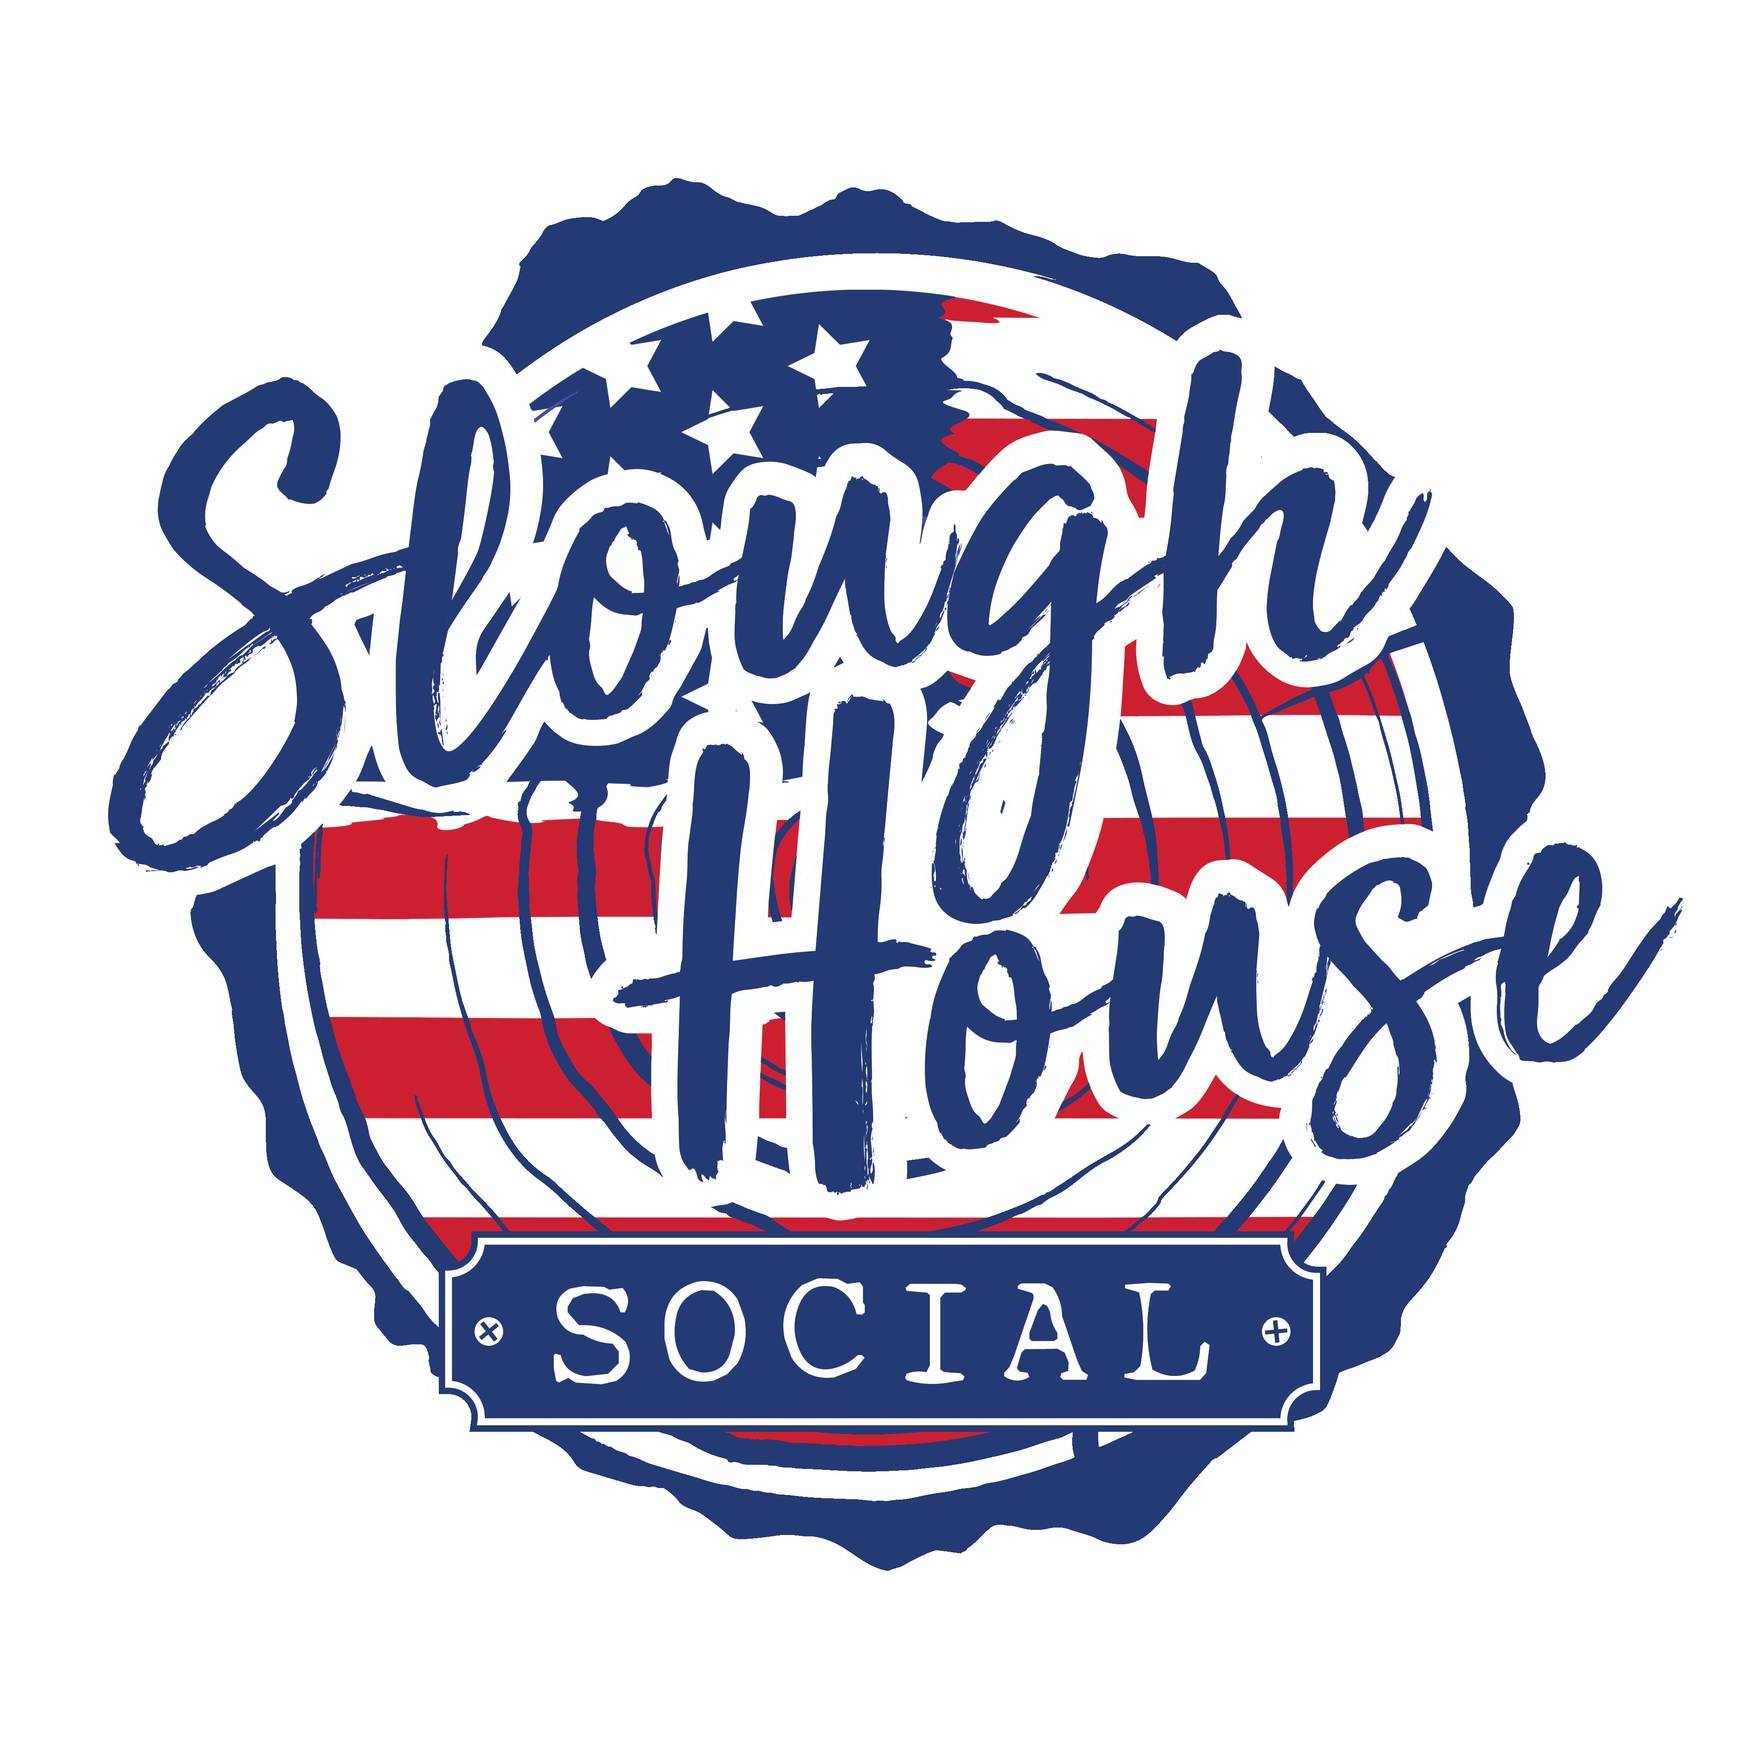 Slough House Social